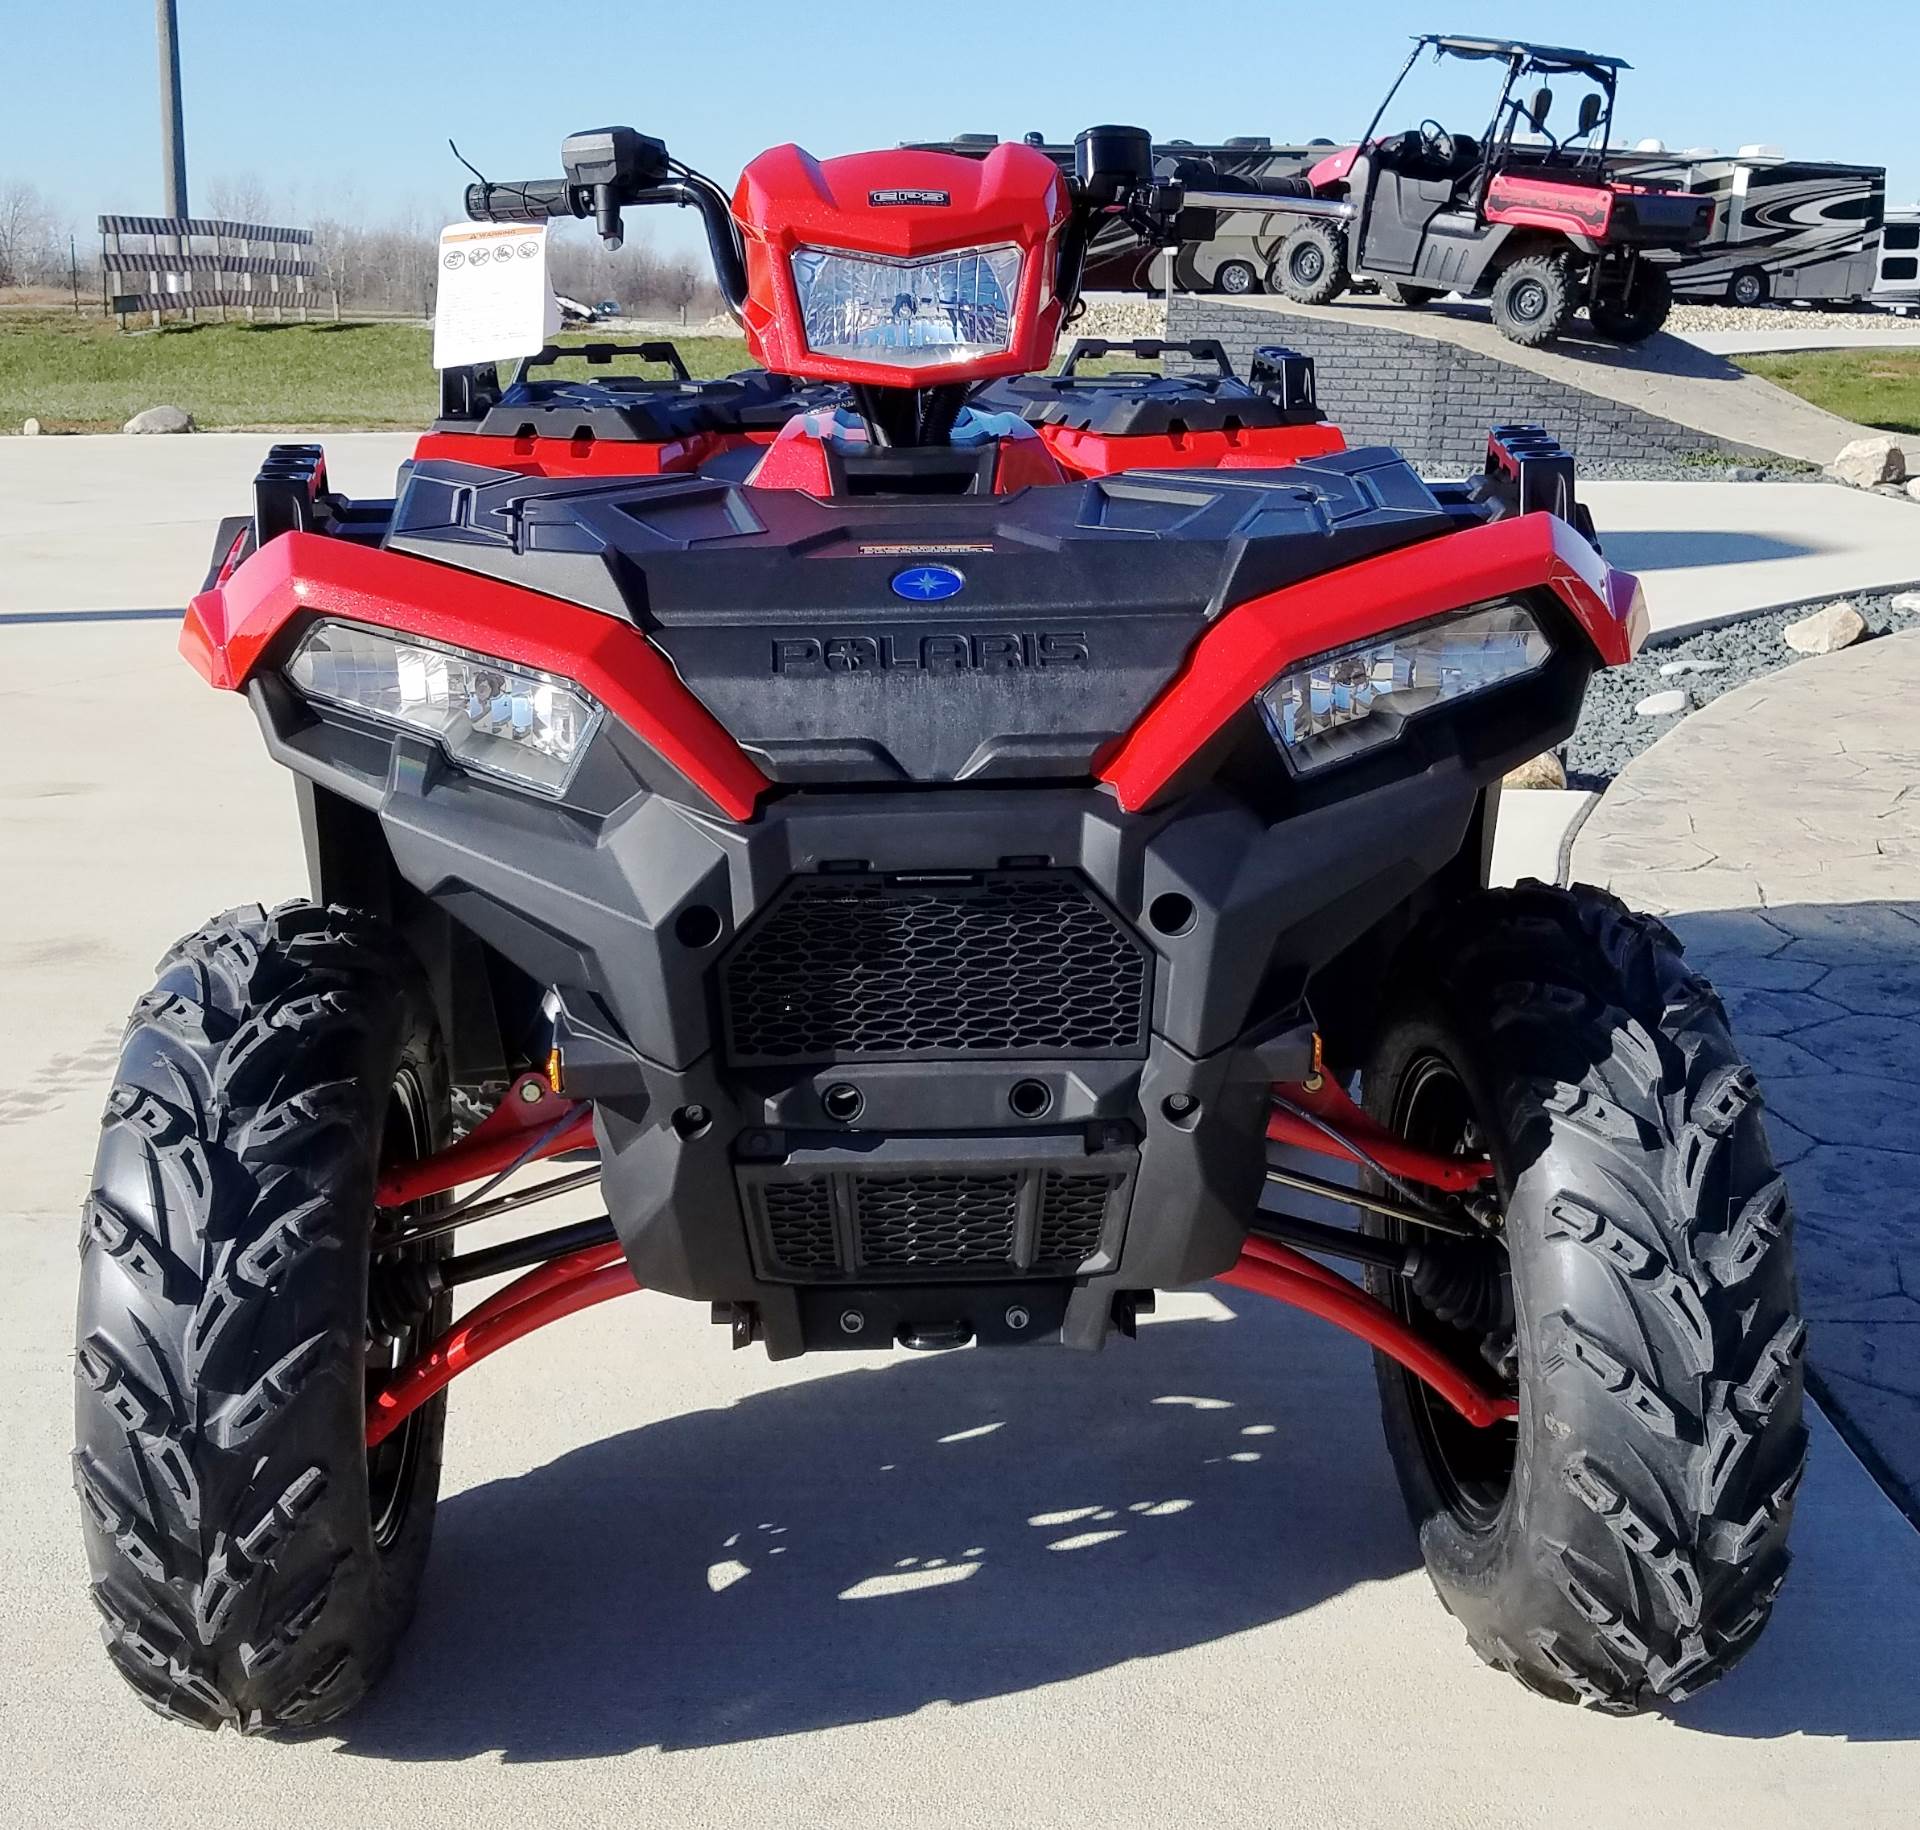 New 2018 Polaris Sportsman XP 1000 ATVs in Ottumwa, IA | Stock ...